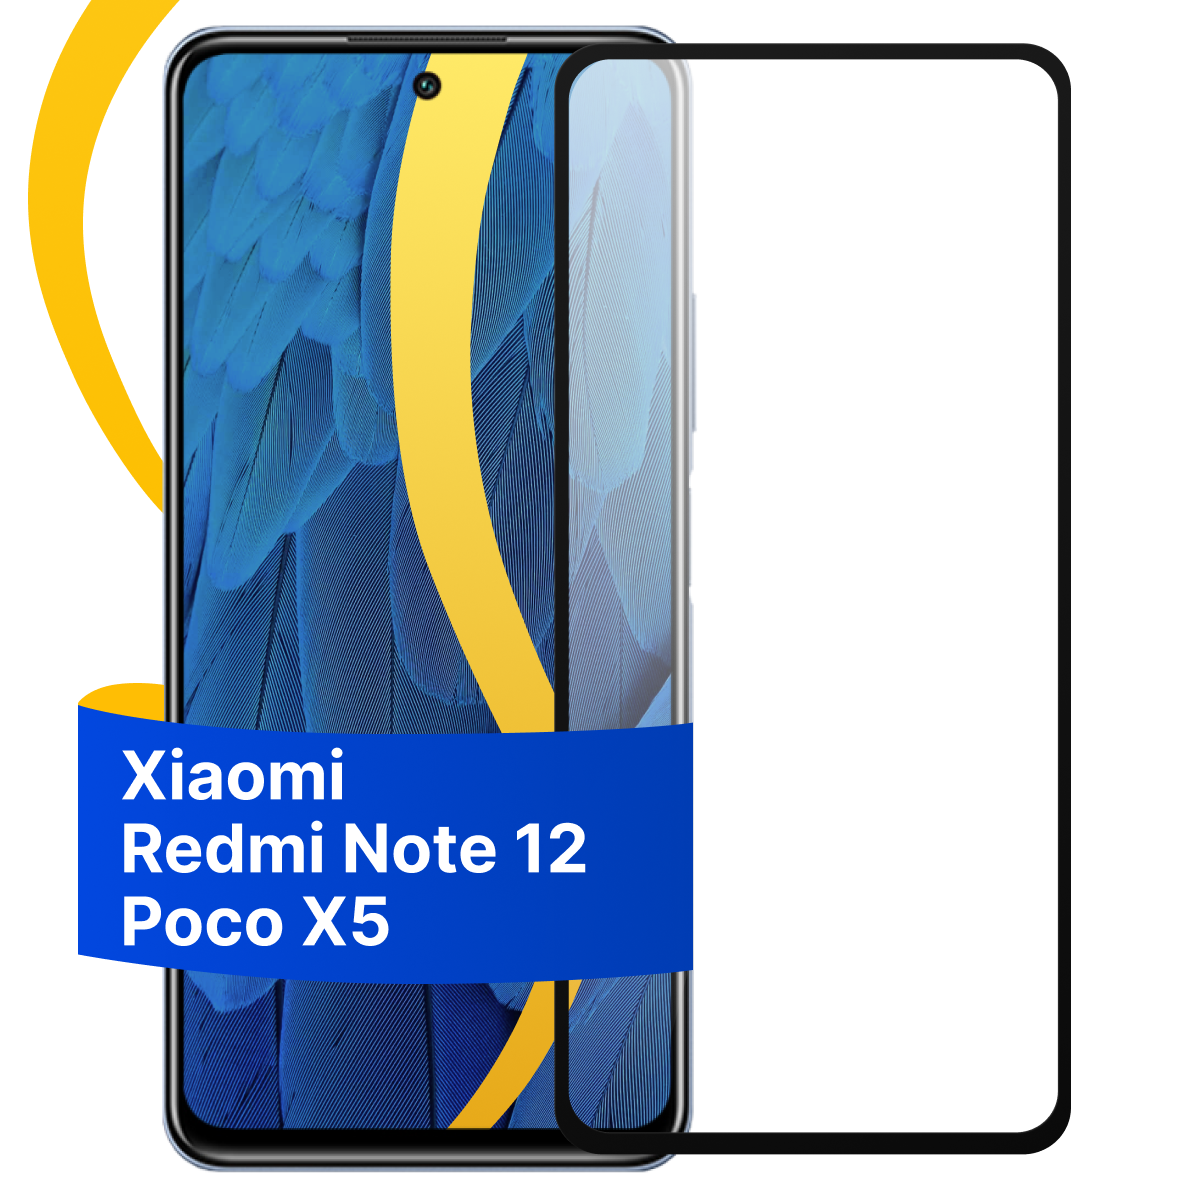 Глянцевое защитное стекло для телефона Xiaomi Redmi Note 12 и Poco X5 / Противоударное стекло на смартфон Сяоми Редми Нот 12 и Поко Х5